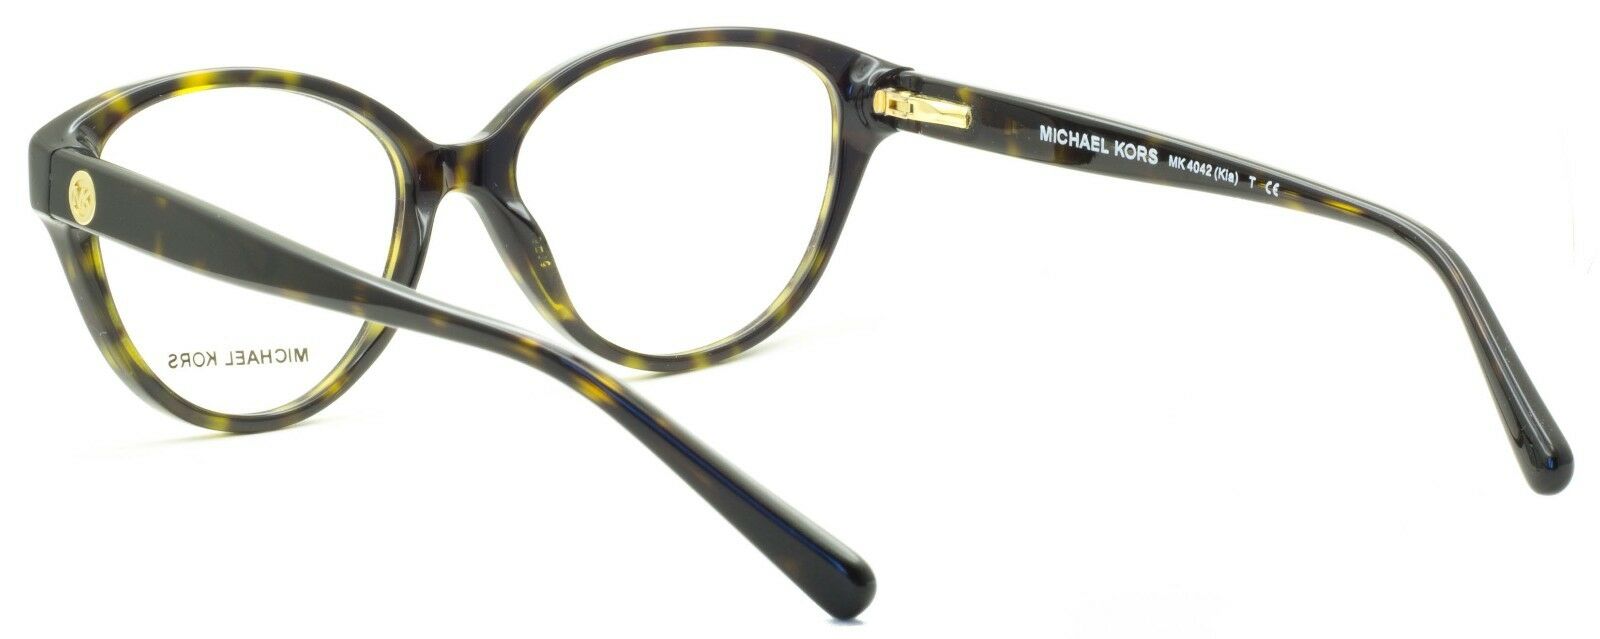 MICHAEL KORS MK 4042 3006 Kia Eyewear FRAMES RX Optical Glasses Eyeglasses - New